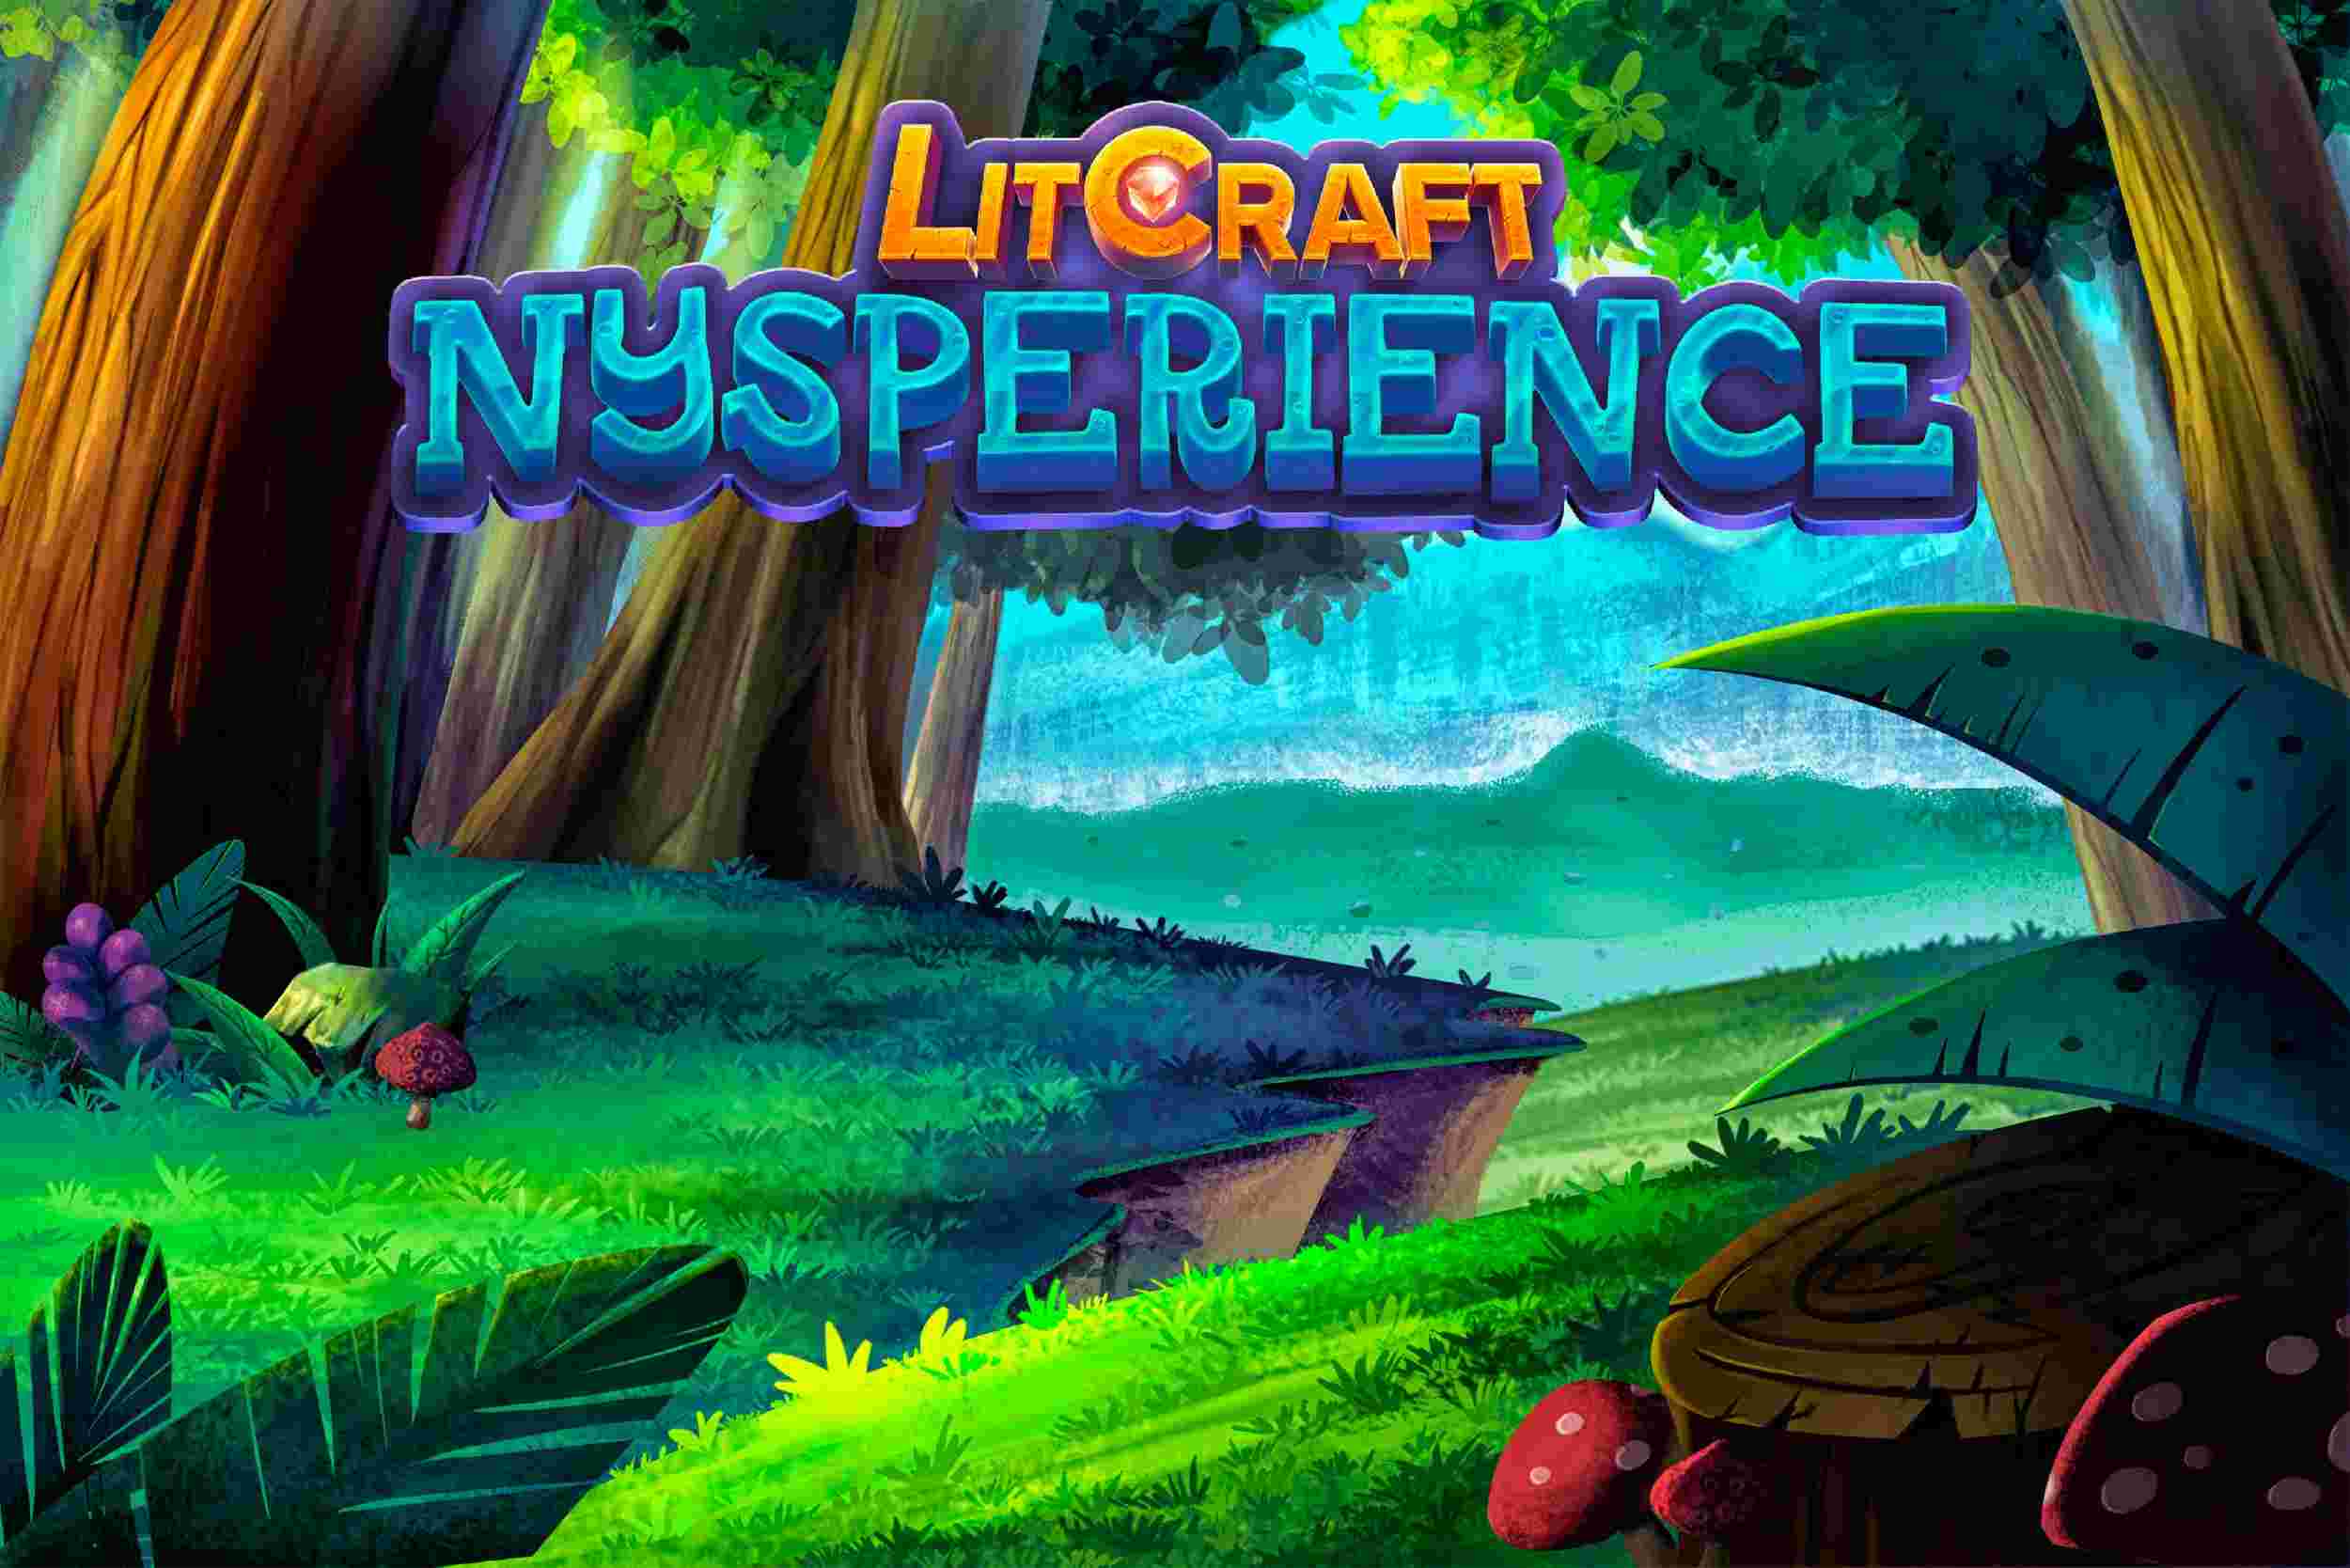 LitCraft: Nysperience - Oyun İncelemesi